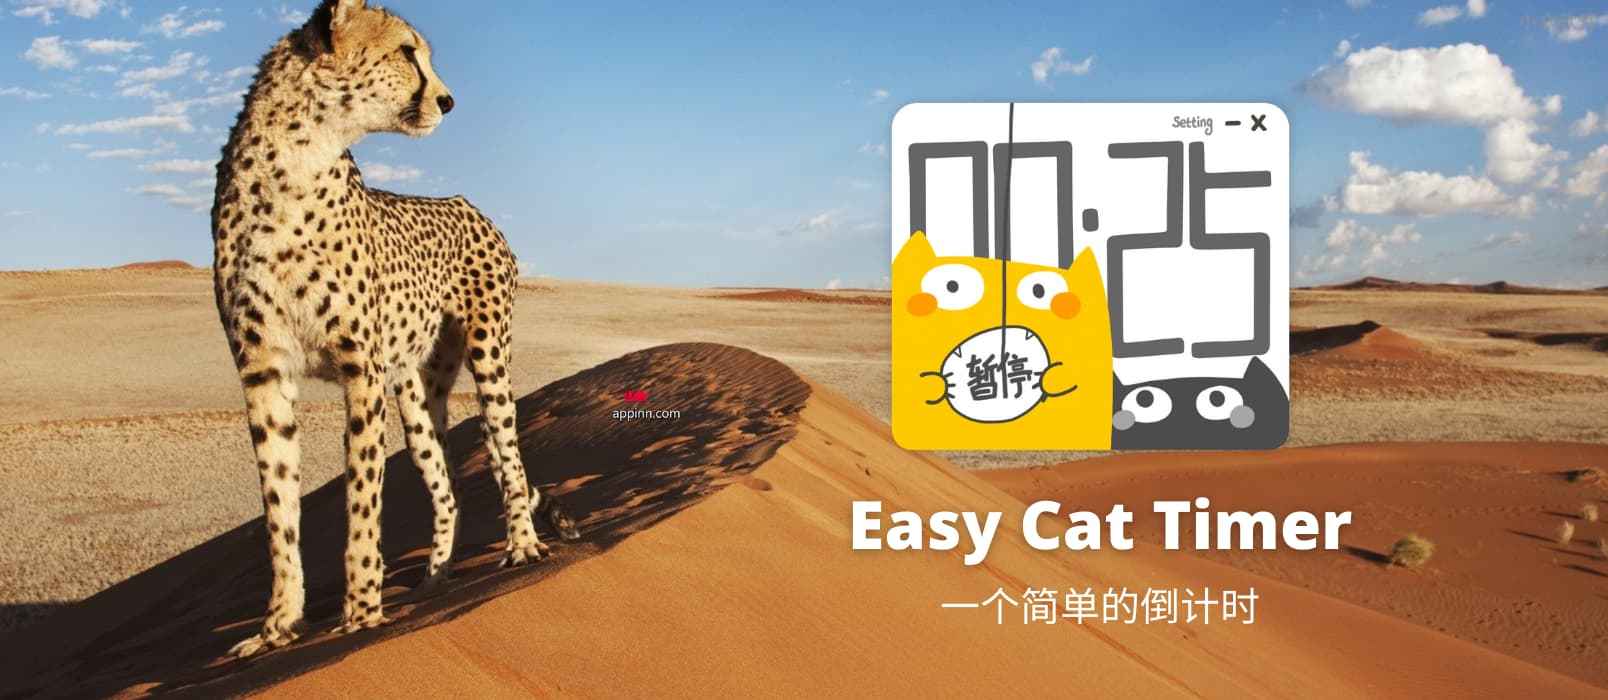 Easy Cat Timer - 简单的倒计时工具，2 只猫咪，爱不释手[Windows]